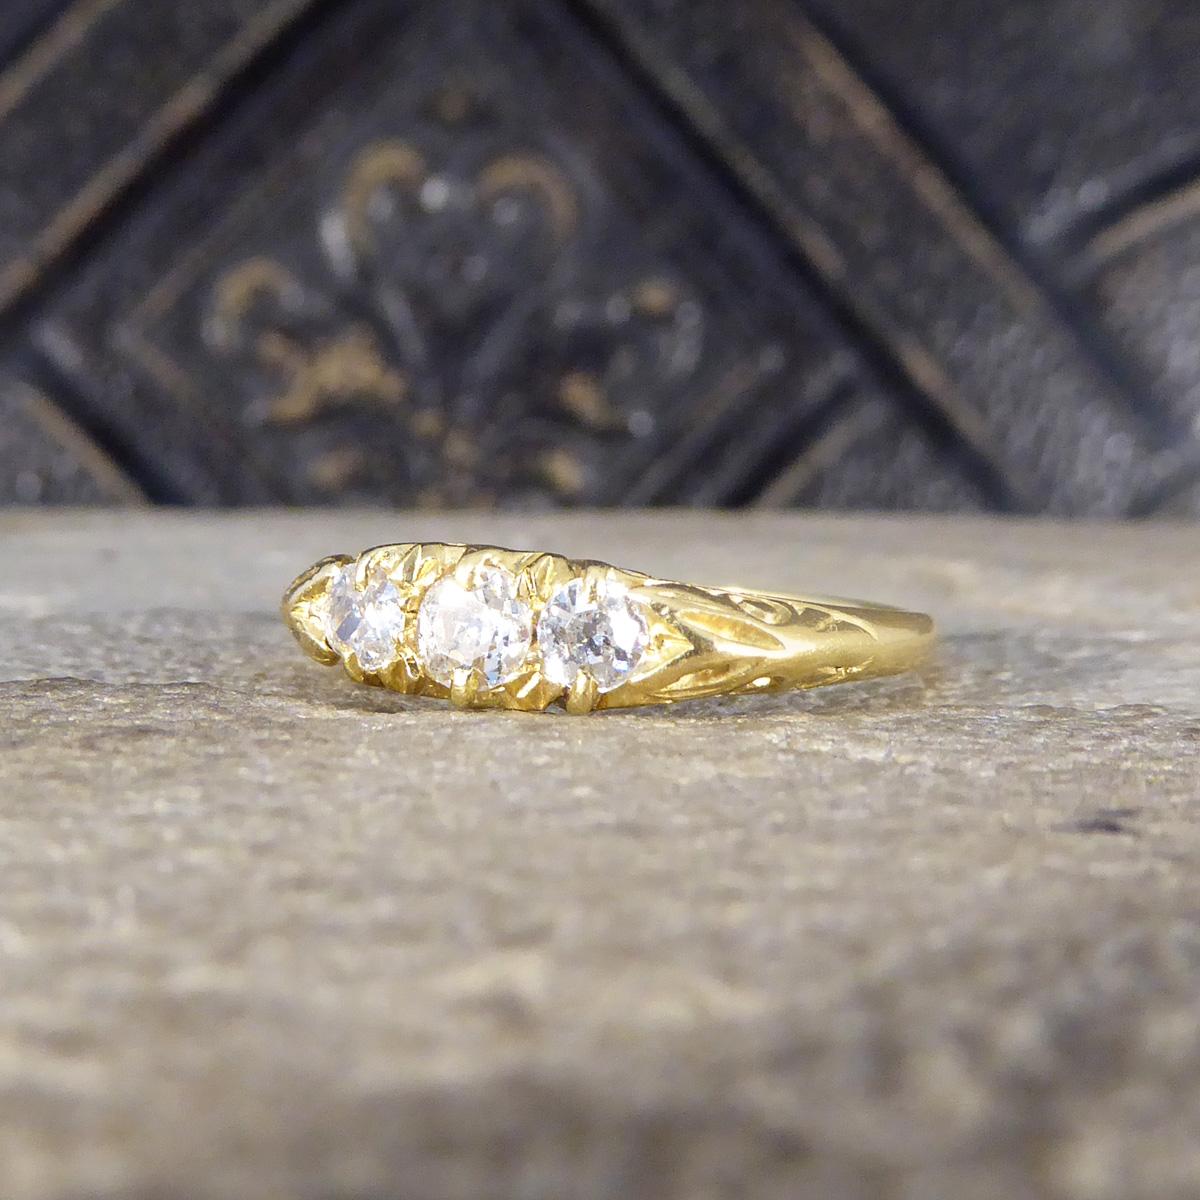 Women's Edwardian Three Stone Diamond Ring with Swirl Gallery in 18 Carat Yellow Gold